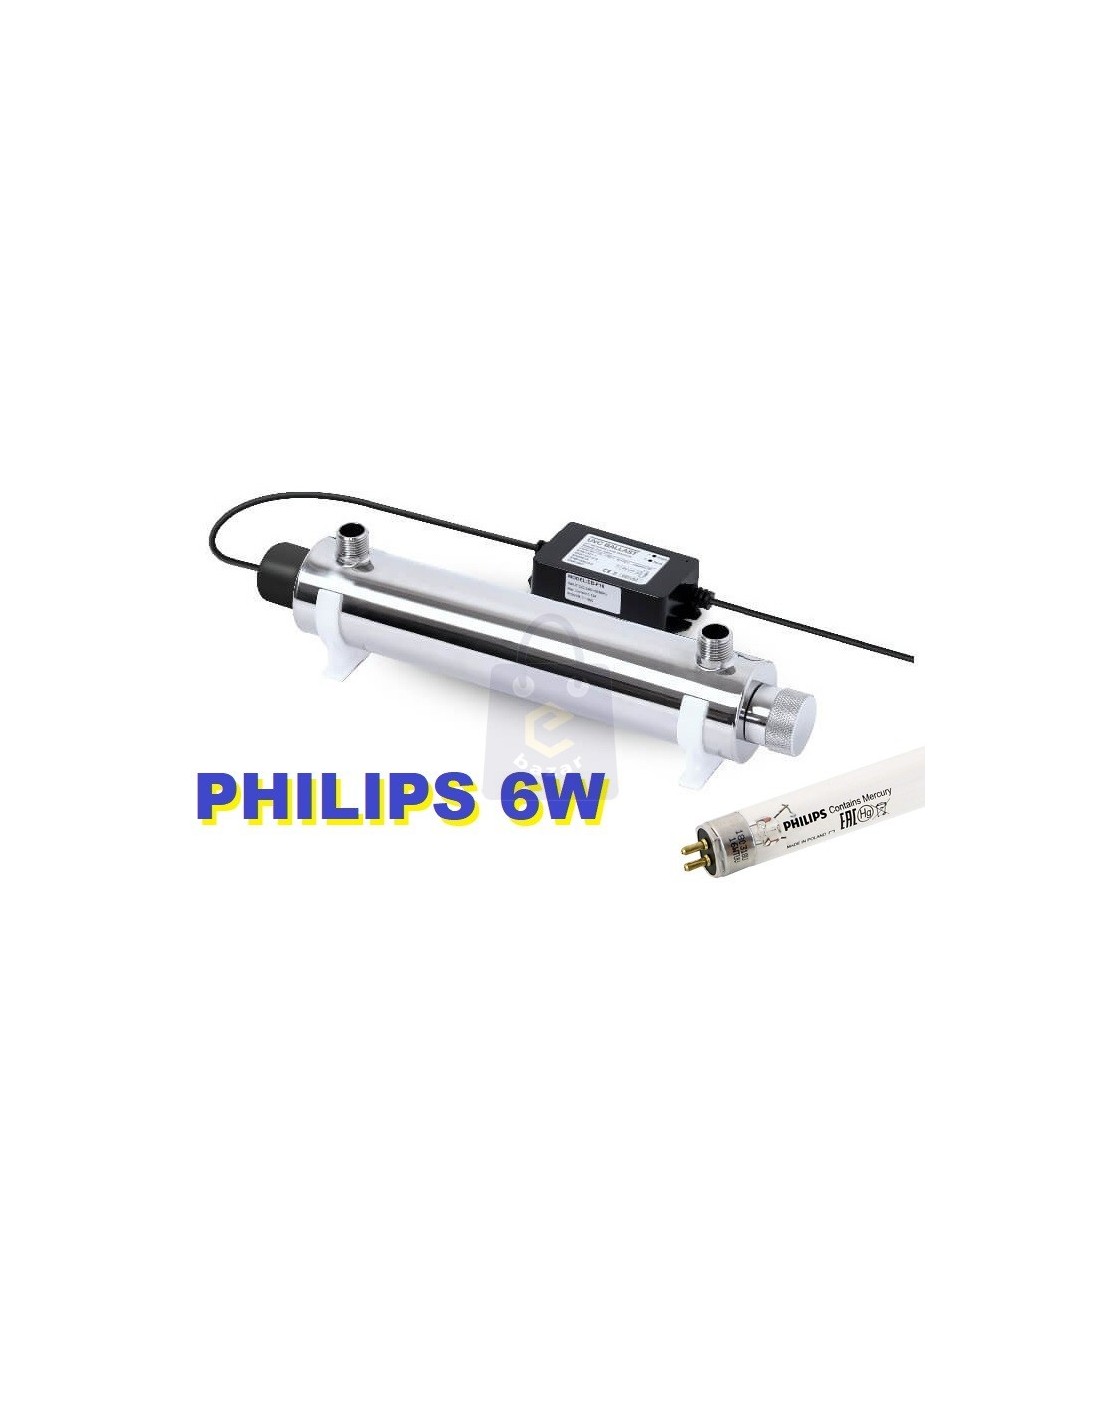 Kit lampada UV 6W PHILIPS per depuratore acqua osmosi inversa